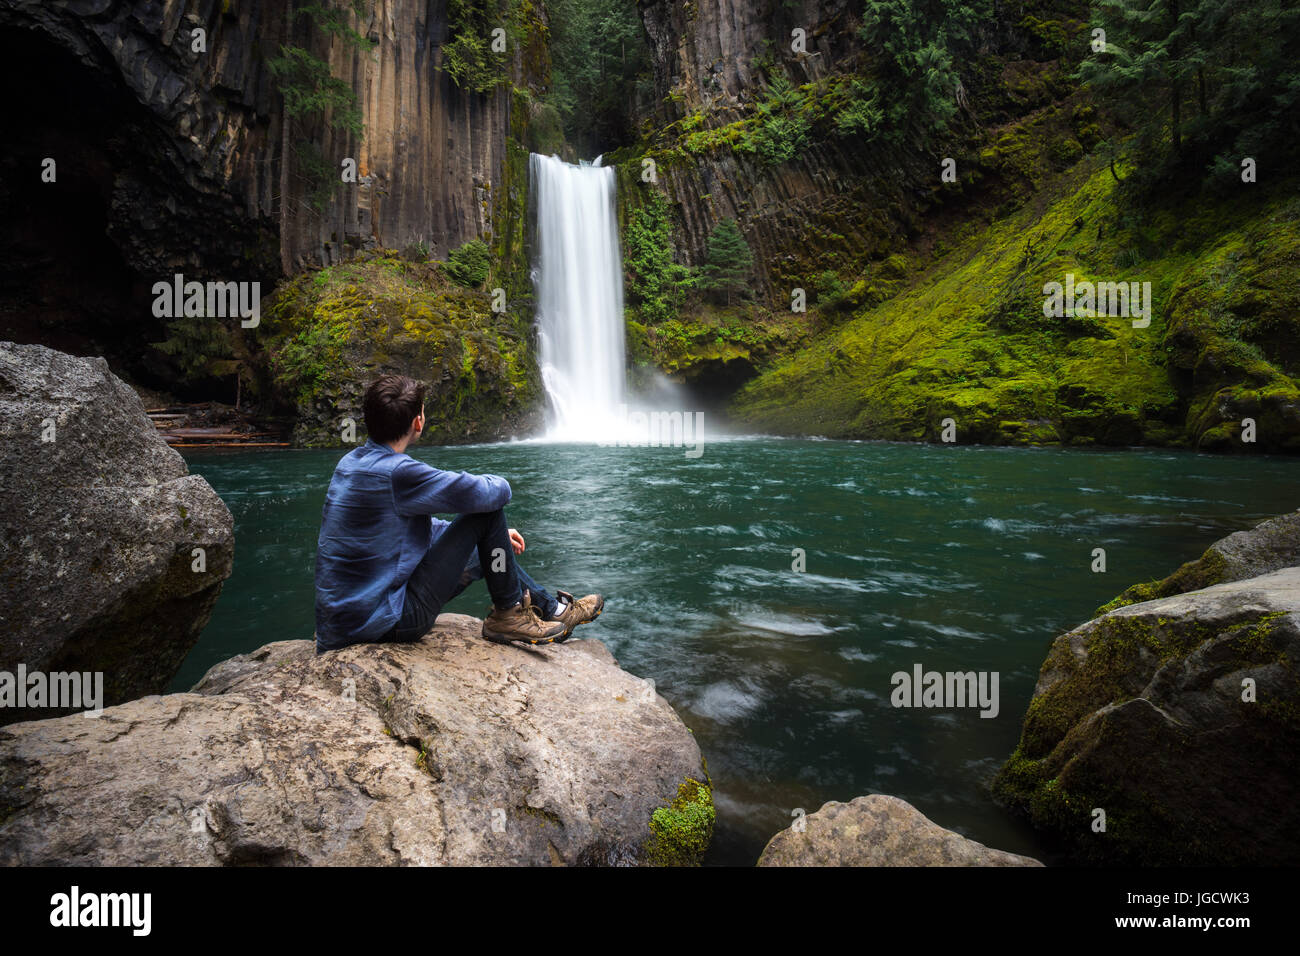 Man sitting on rocks by Toketee Falls, Oregon, United States Stock Photo